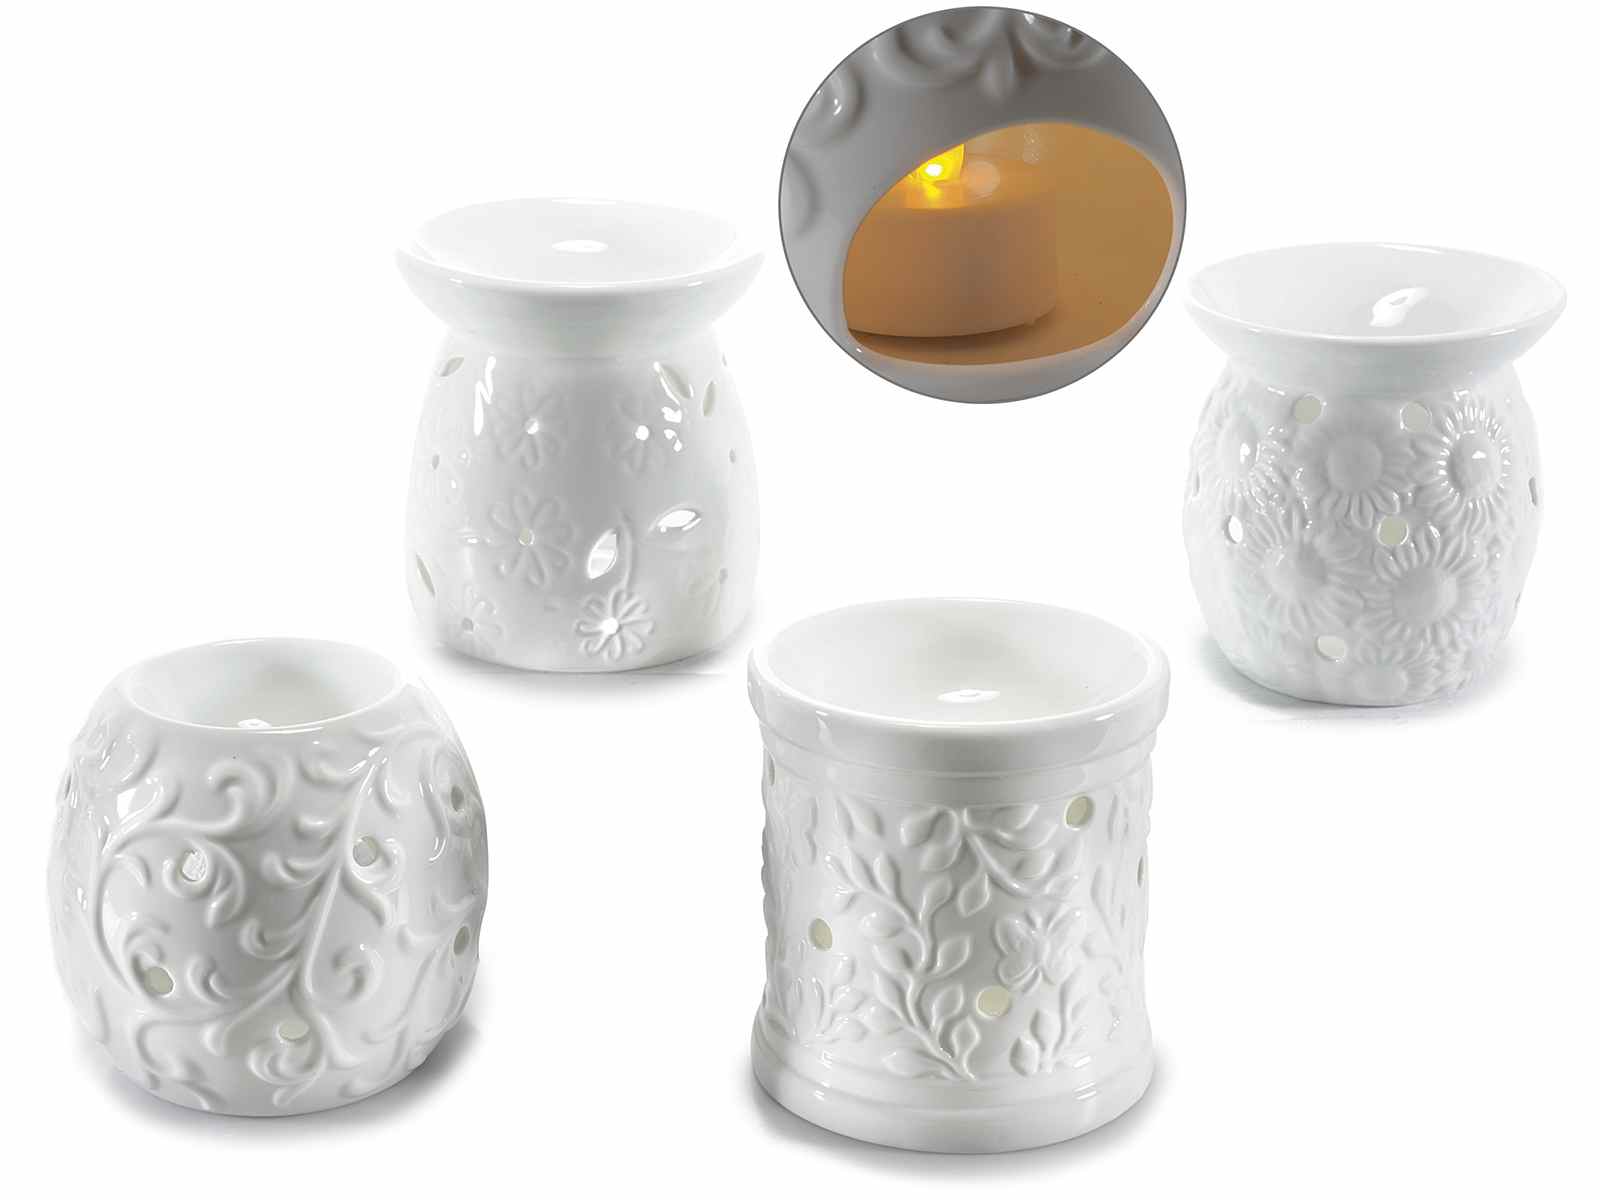 Brucia essenze in ceramica bianca con decori in rilievo – Emotion&Travel